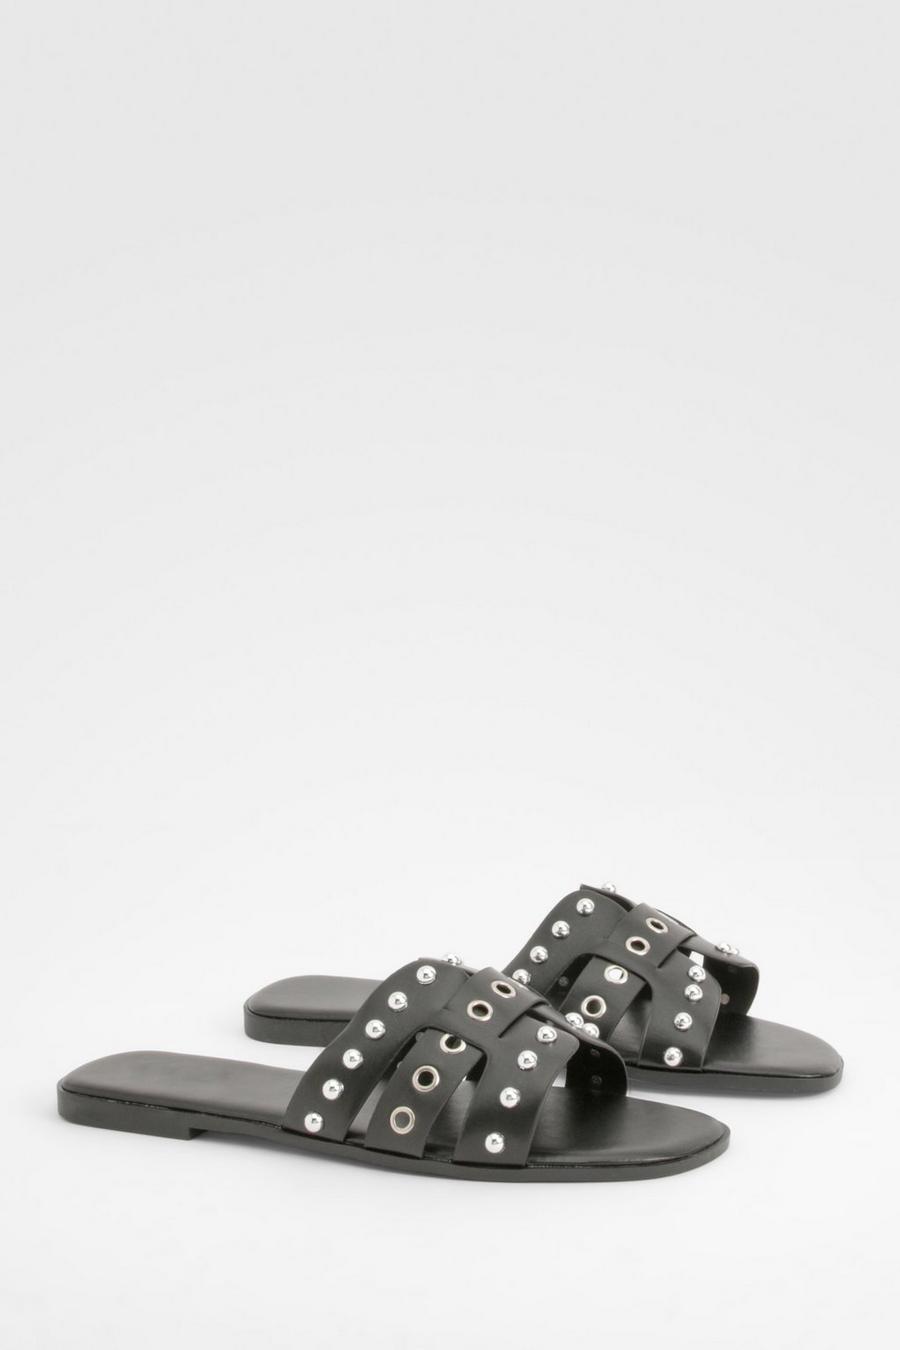 Sandalias de tela de holgura ancha con tachuelas, Black